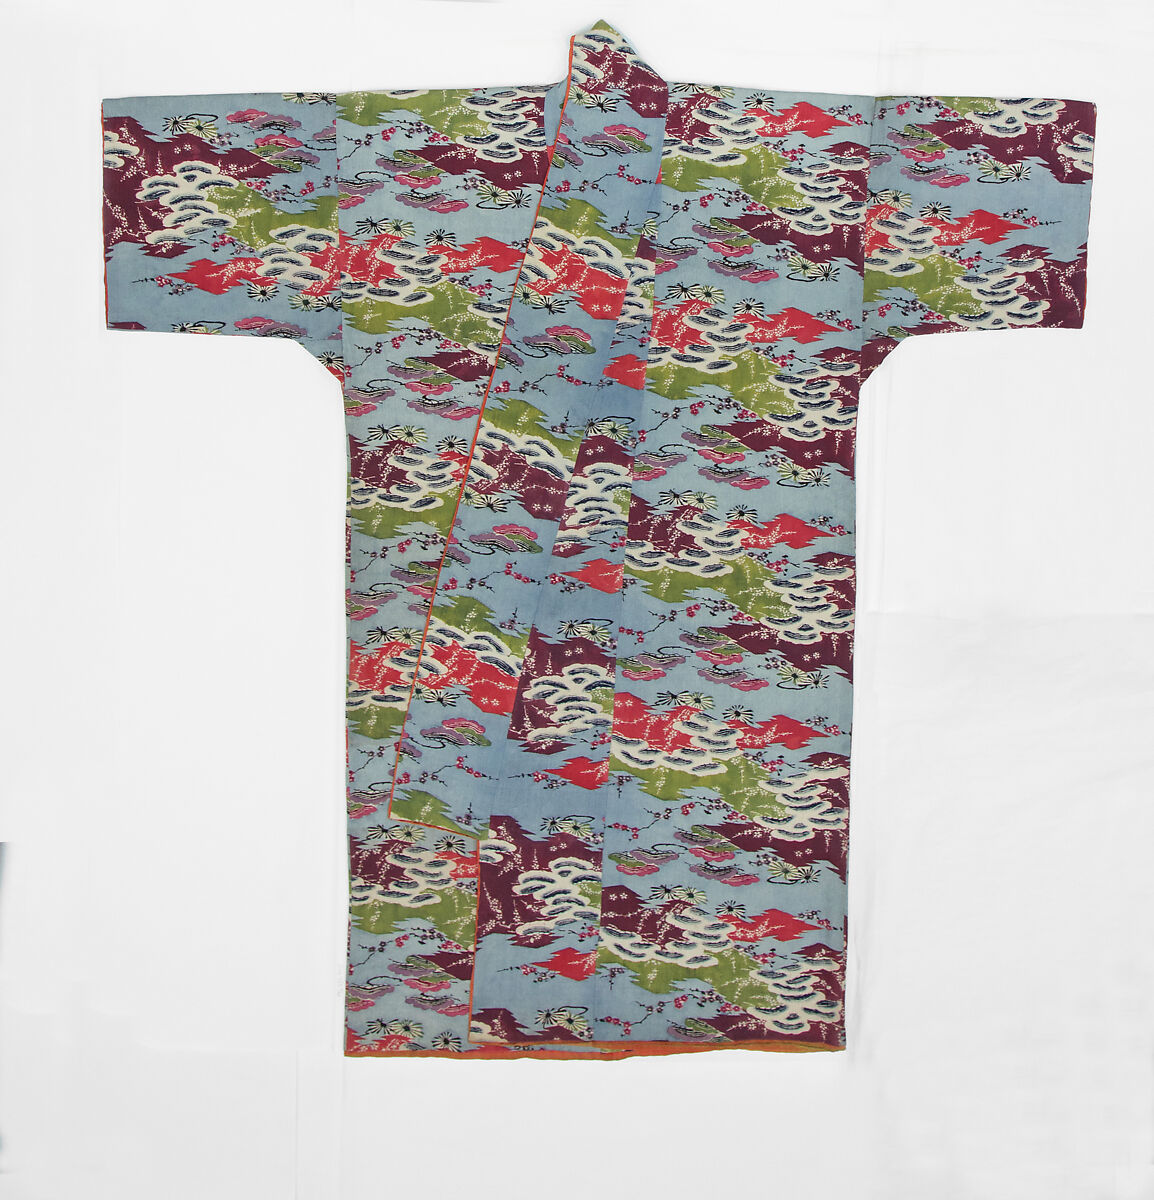 Robe, Resist-dyed and painted (bingata) silk crepe, Japan (Ryūkyū Islands) 